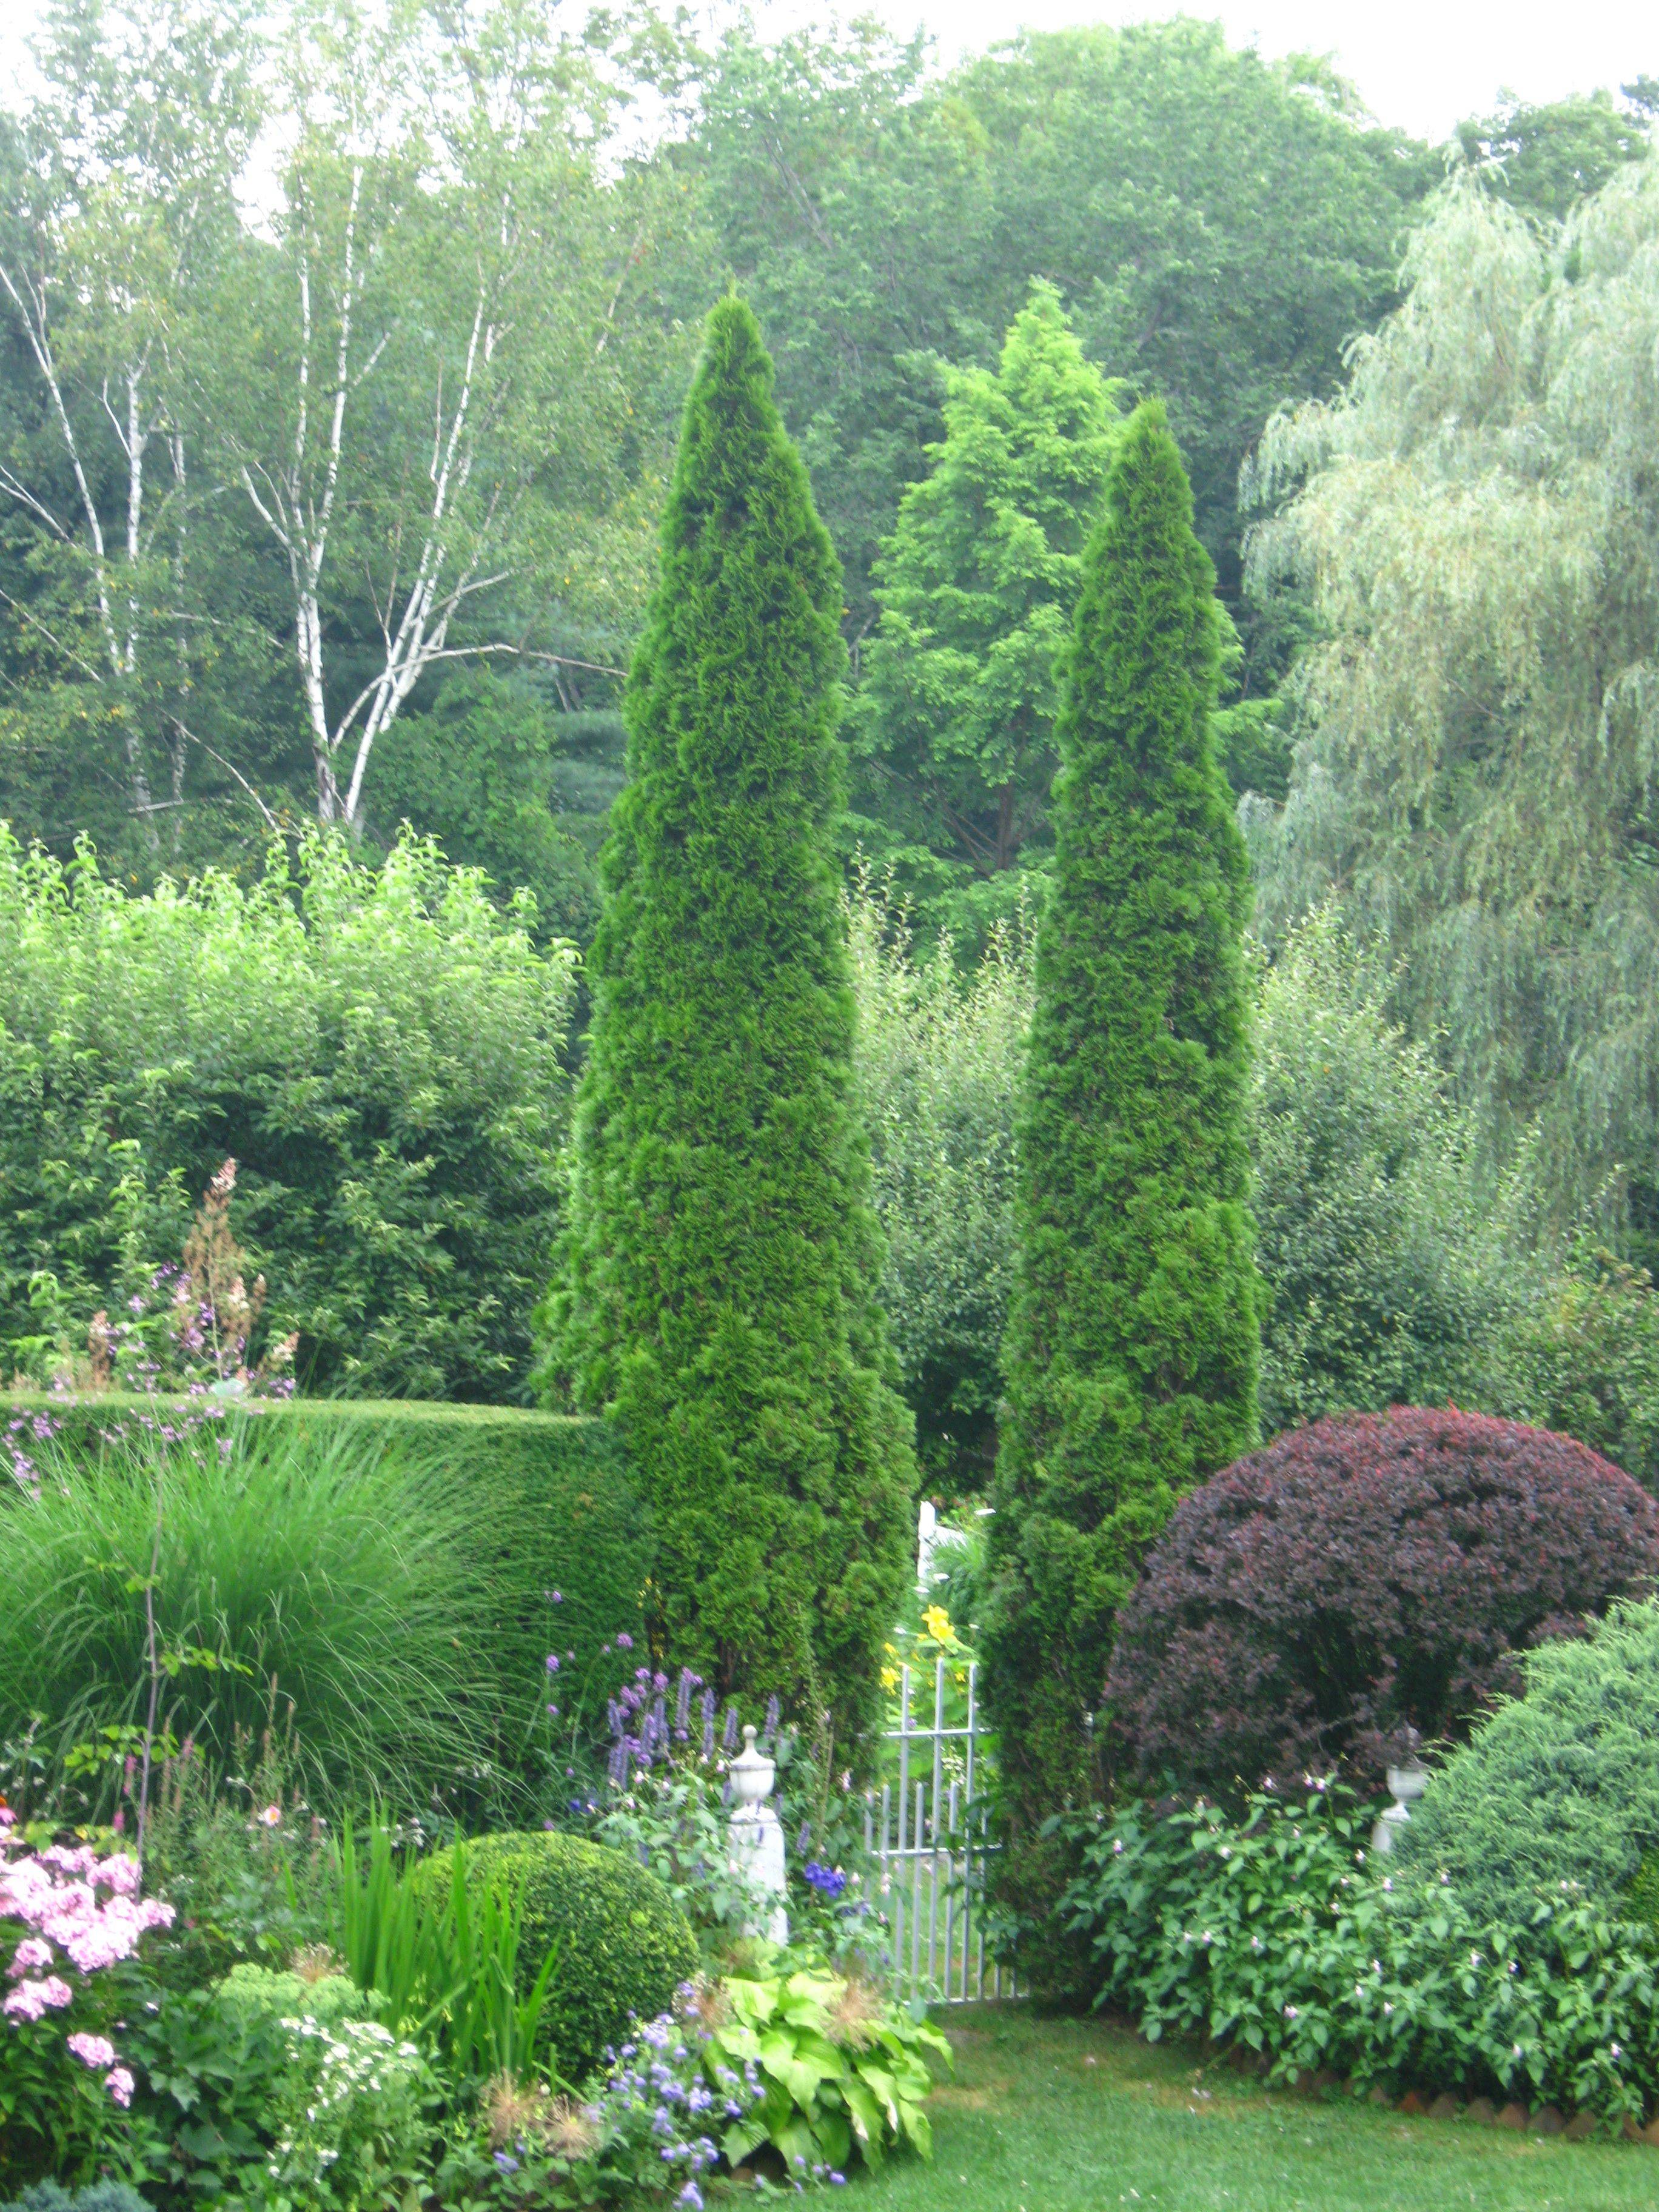 These Italian Cypress